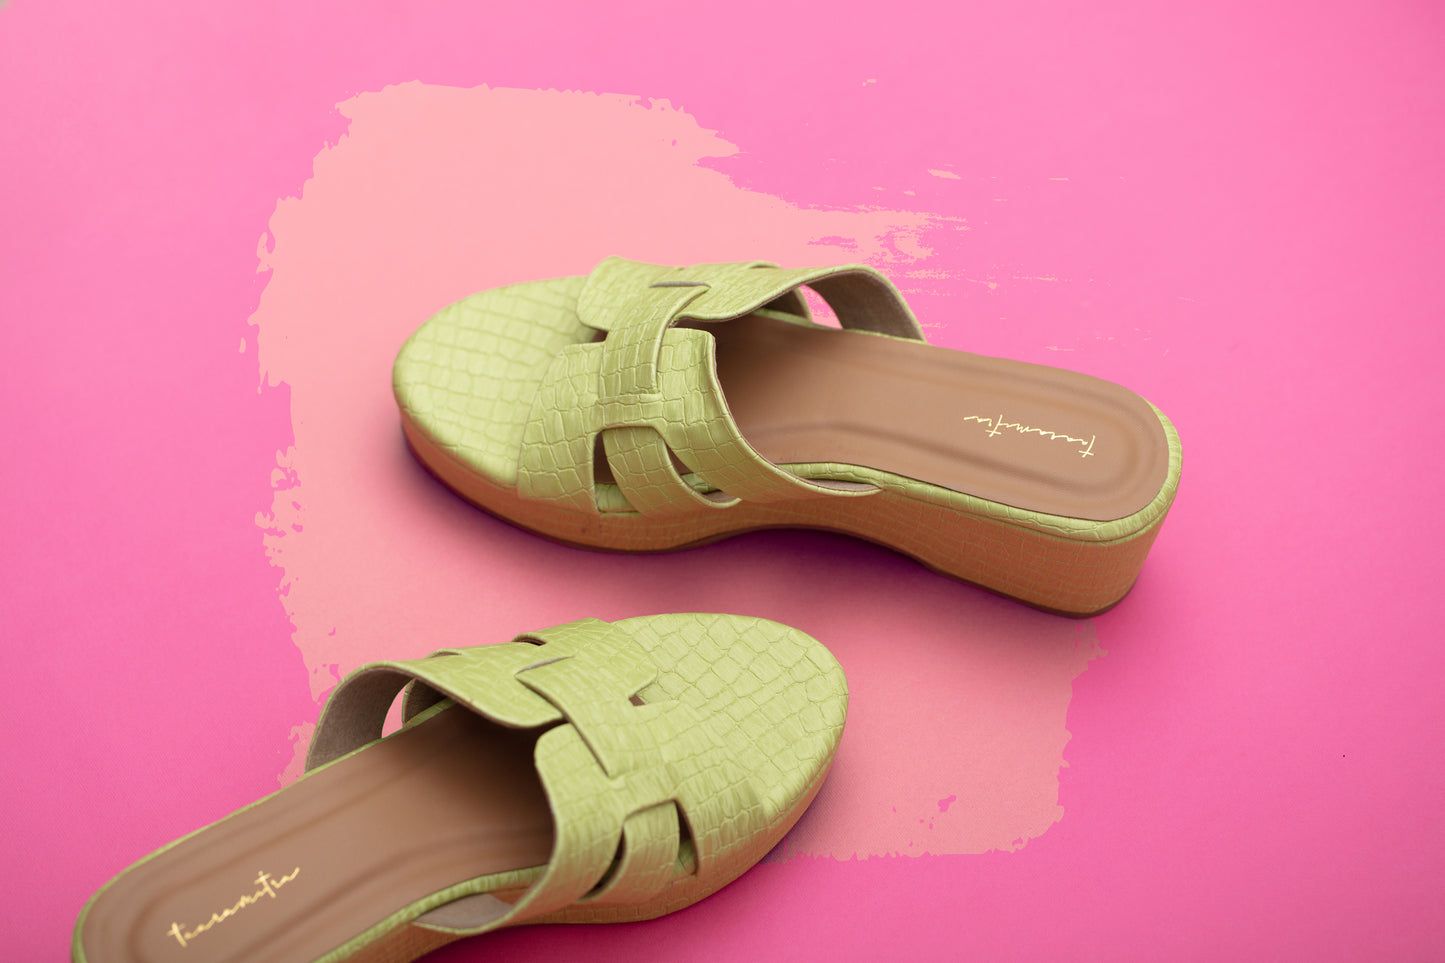 Della flatform in green heel sandals